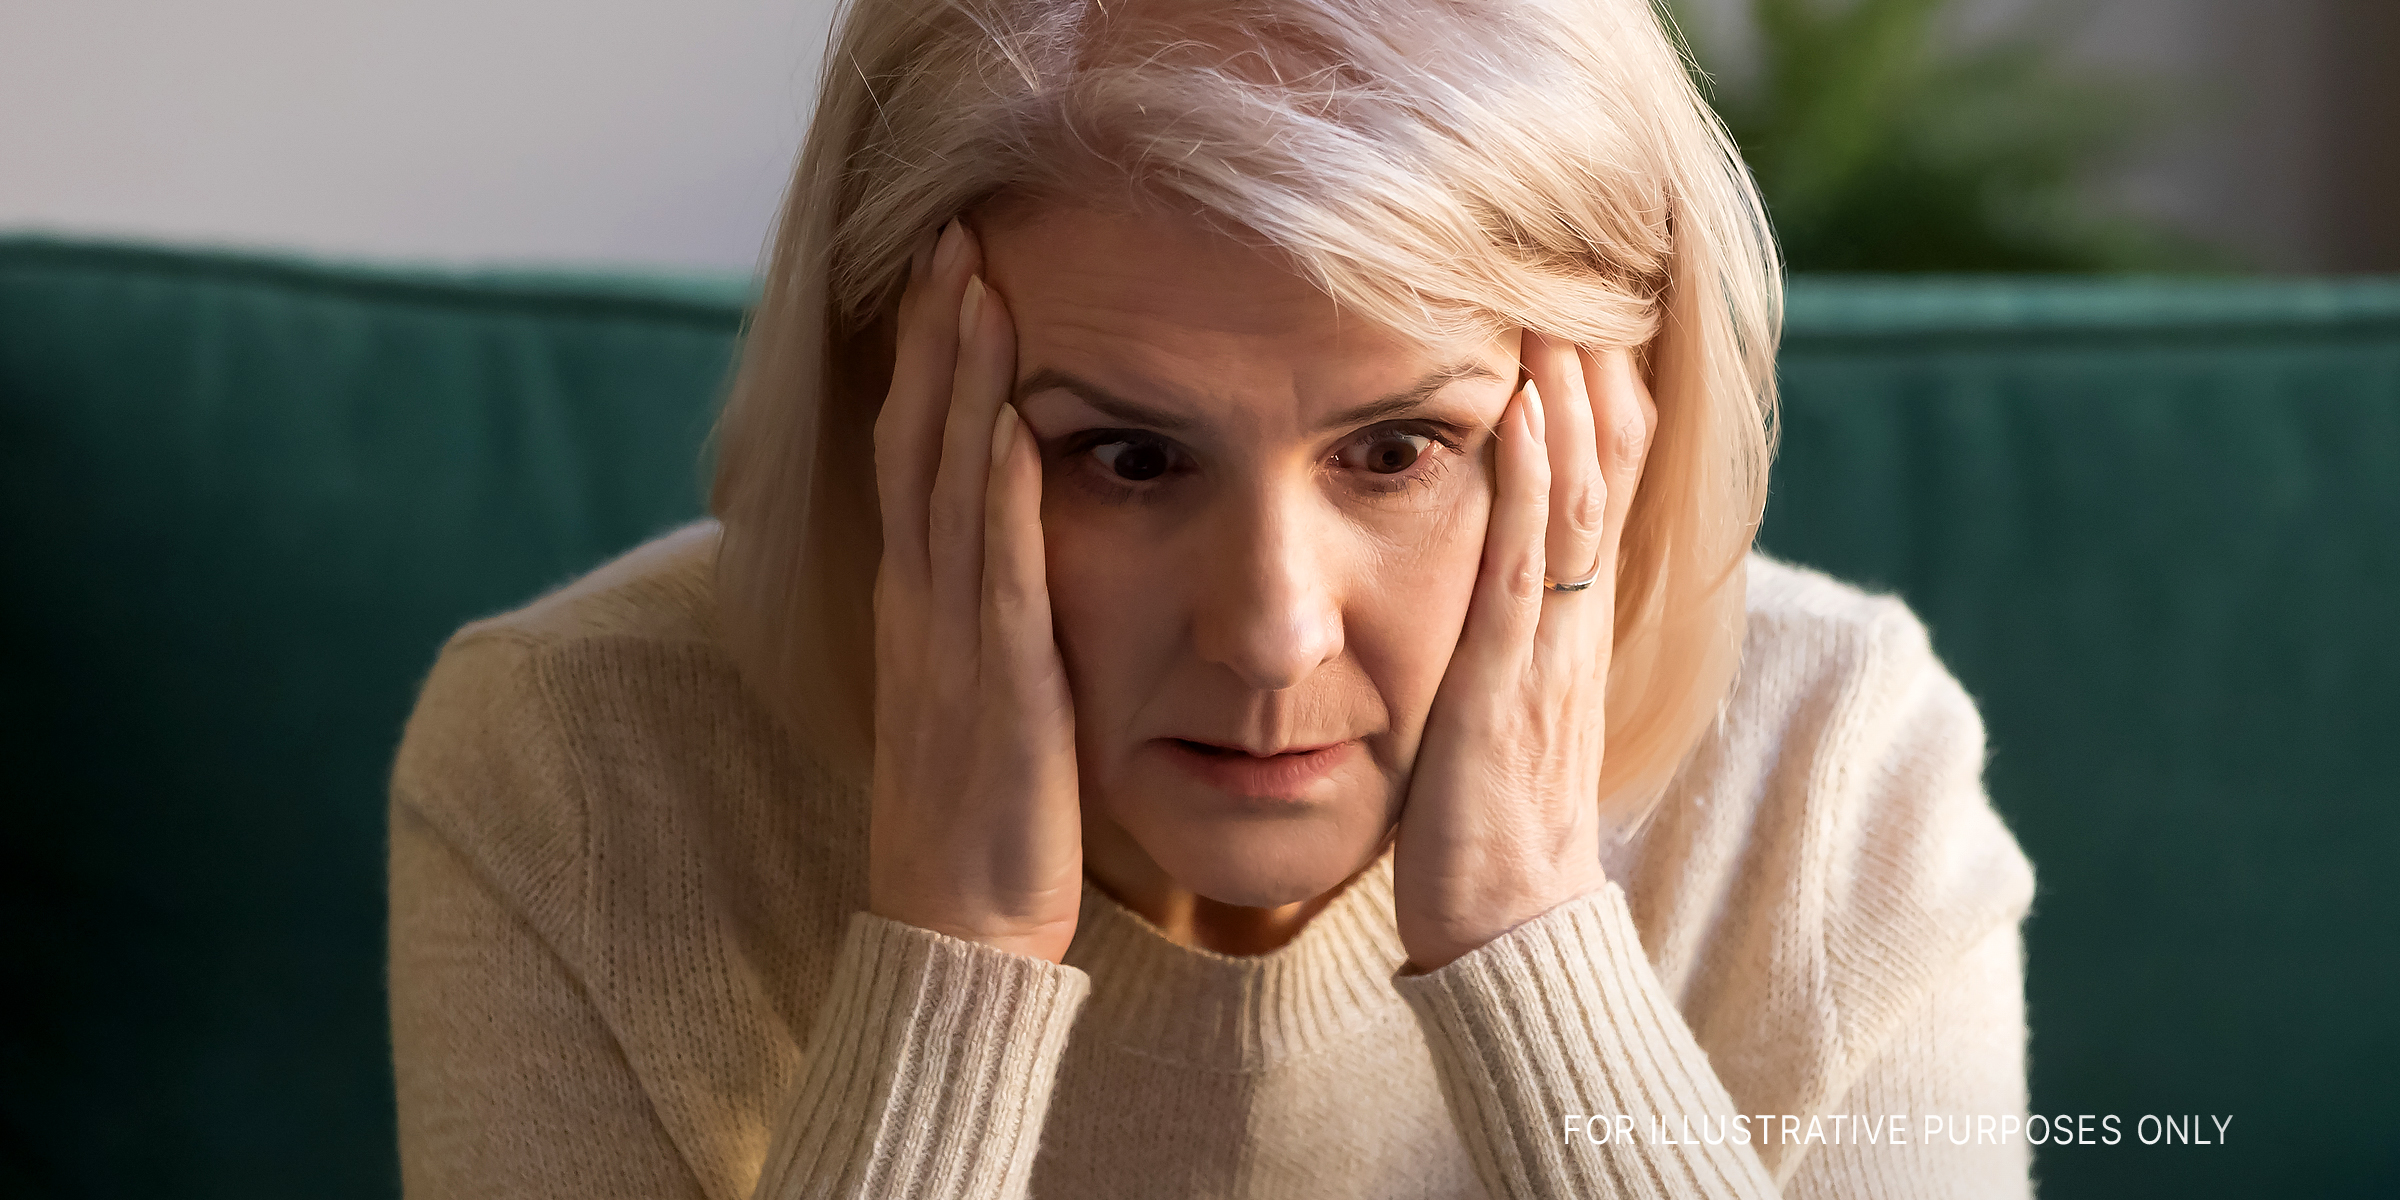 Desperate older woman | Source: Shutterstock